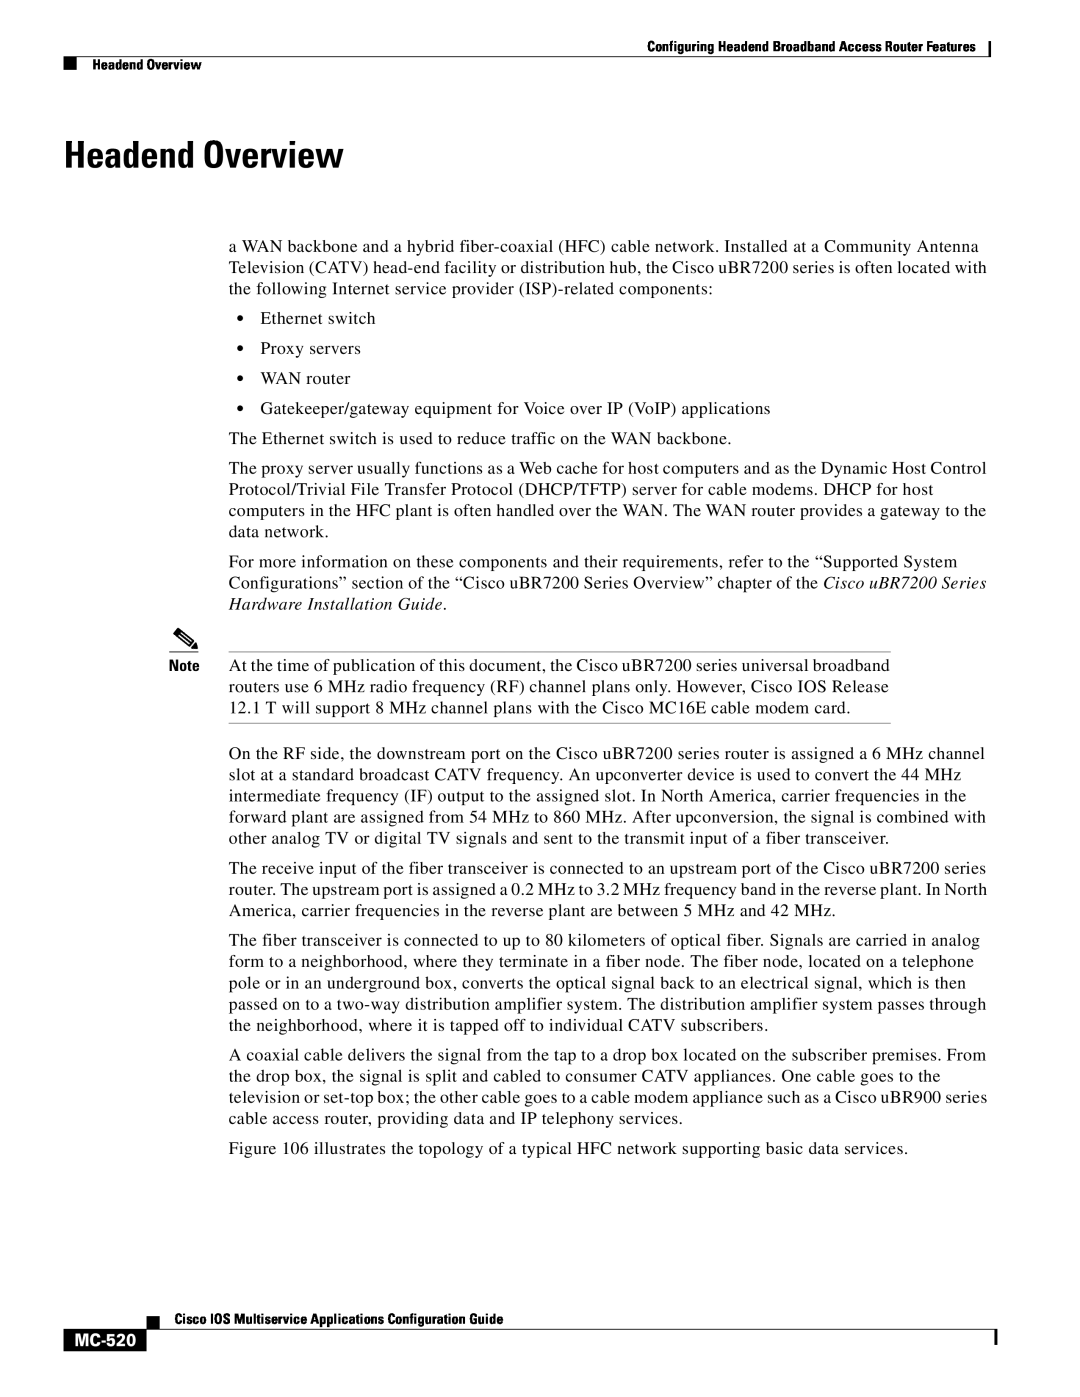 Cisco Systems uBR7200 manual Headend Overview, MC-520 